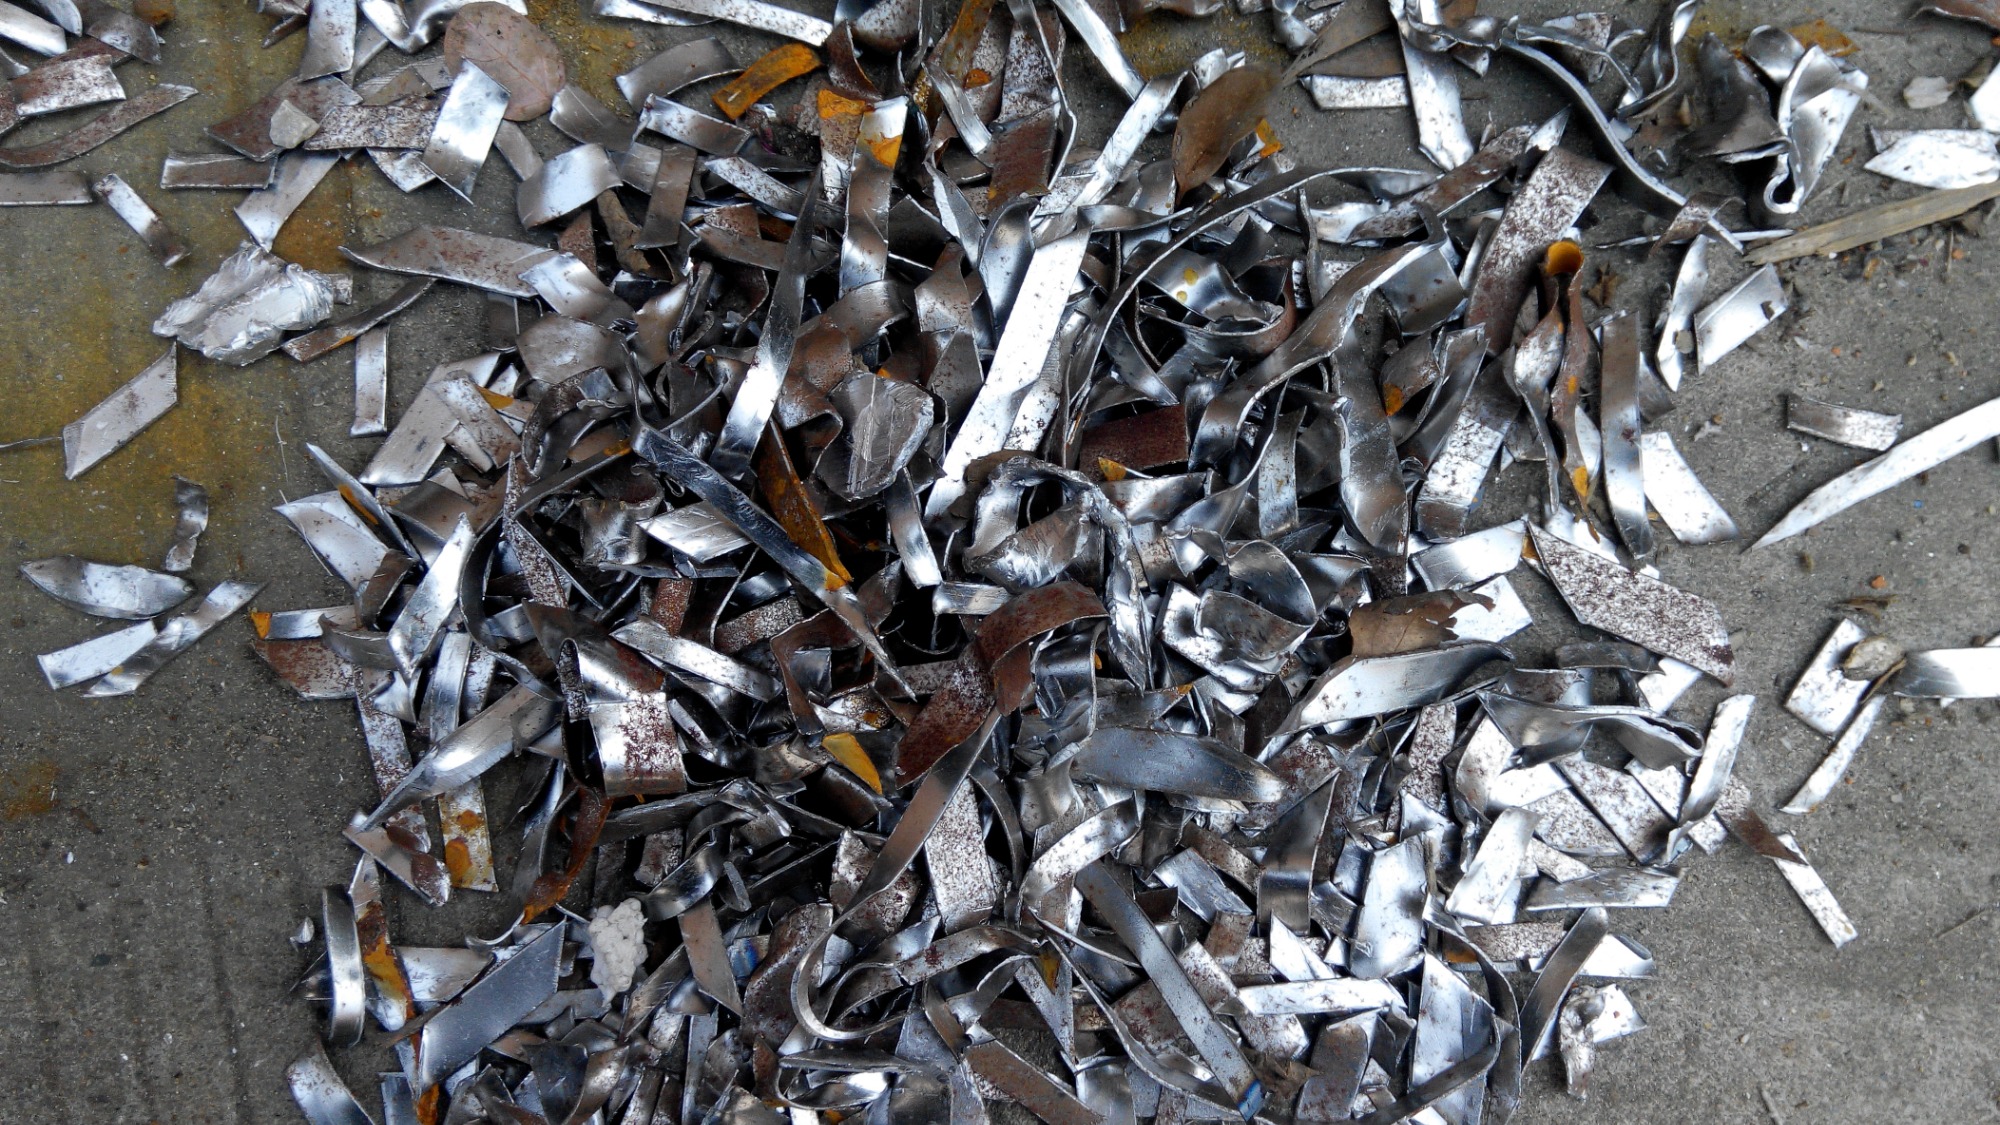 Metal & metal chips shredding